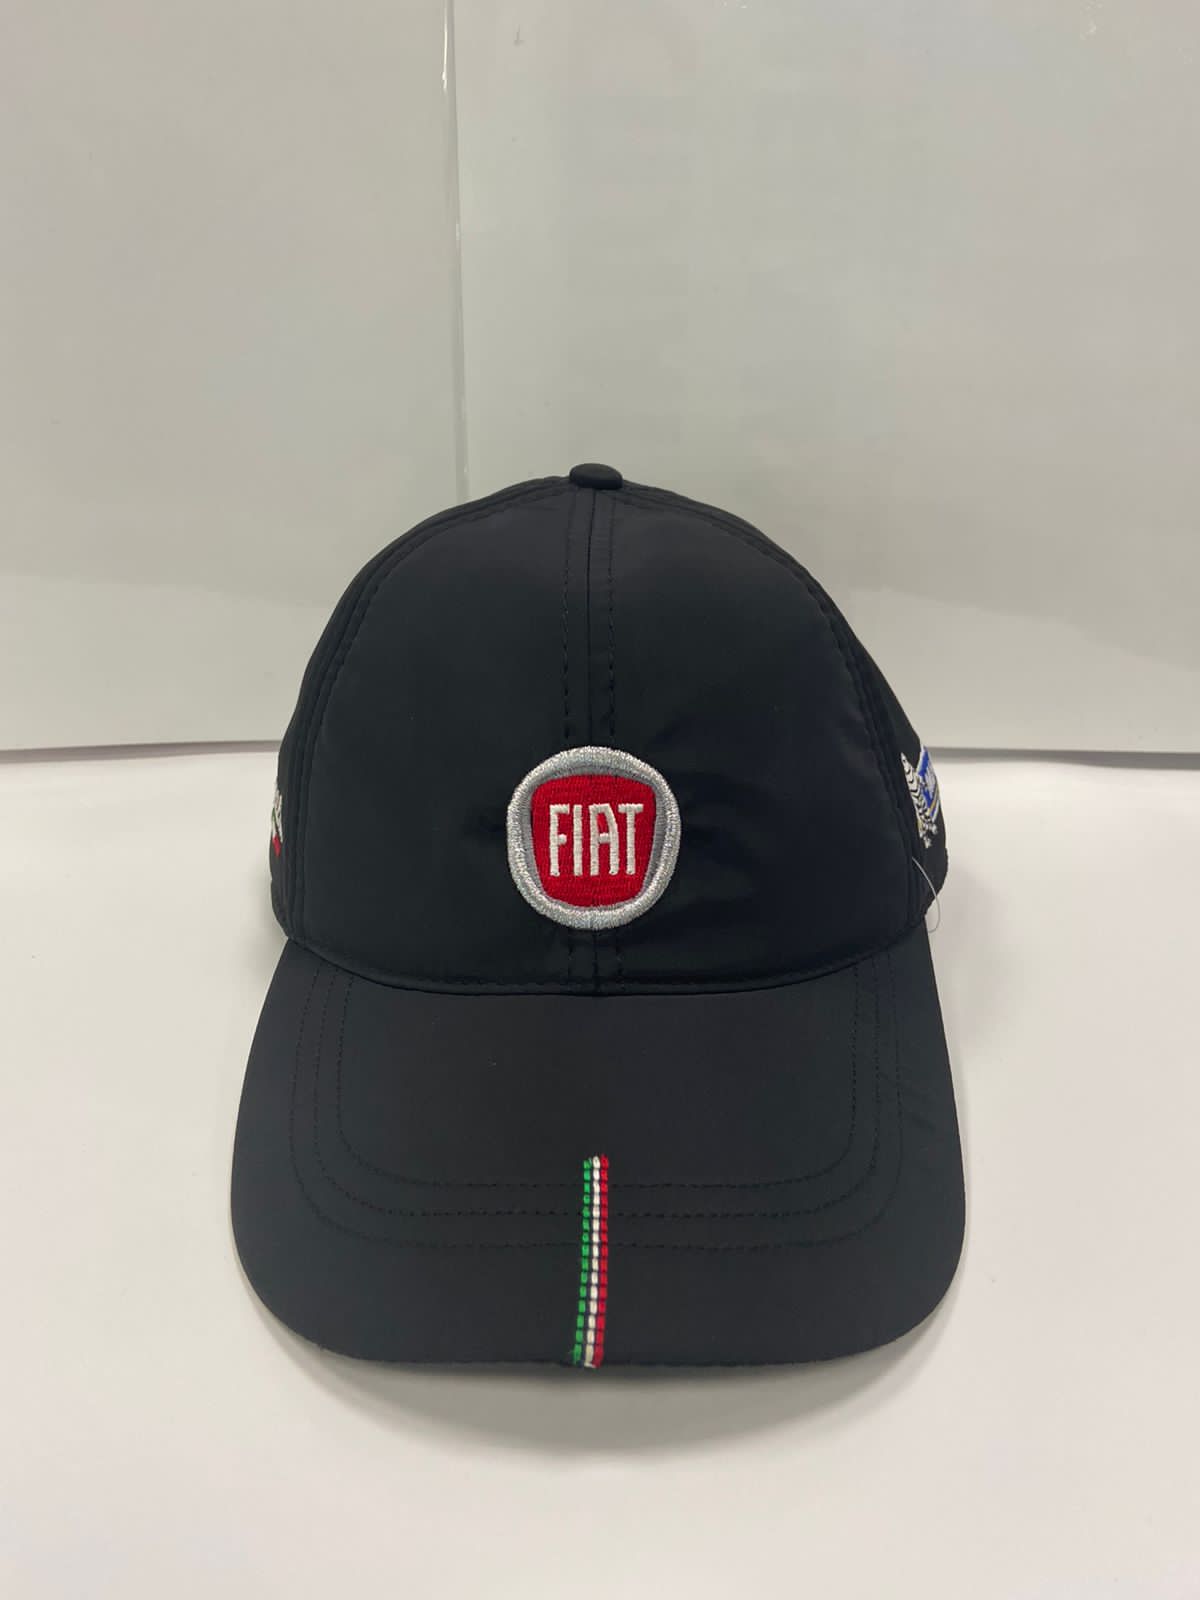 Бейсболка с логотипом Fiat, зимняя